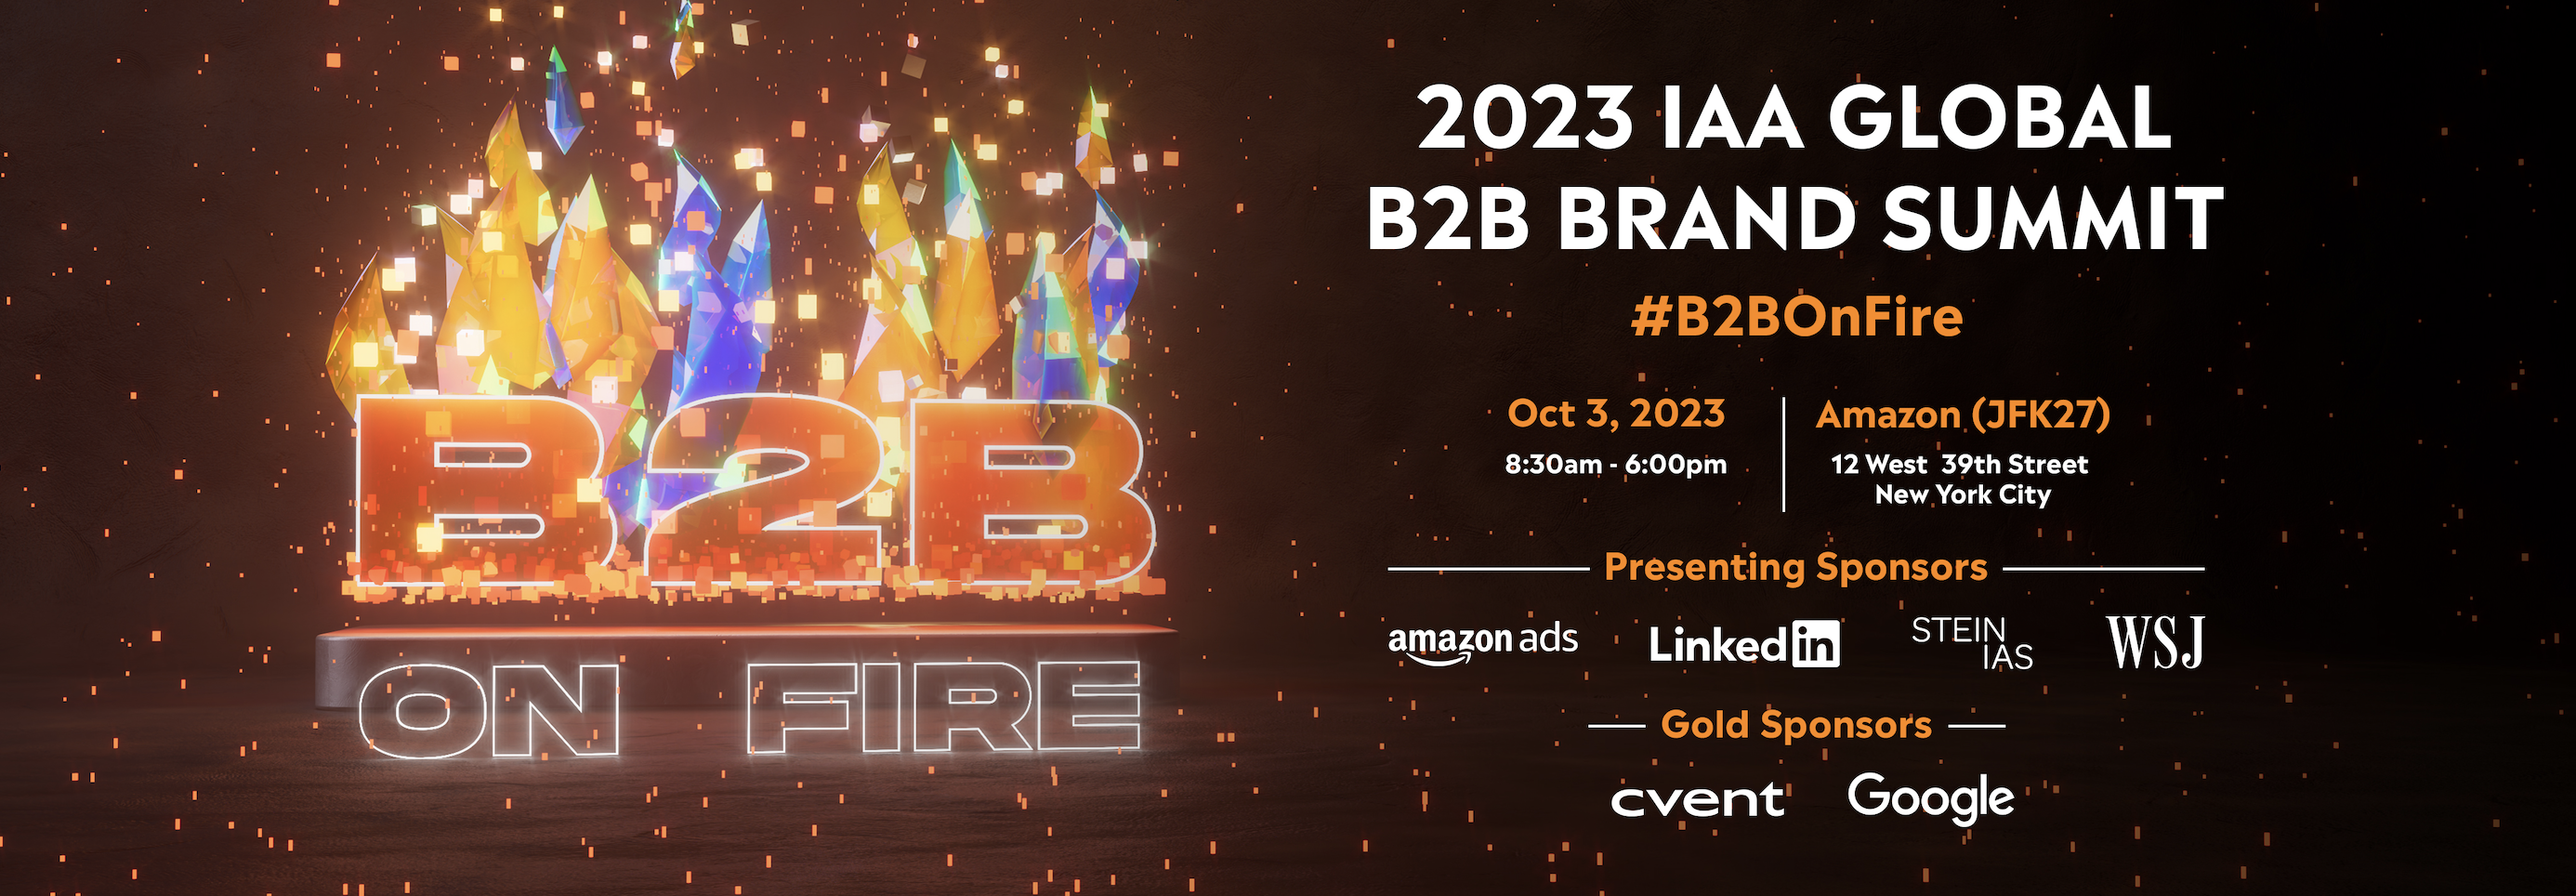 IAA Global B2B Brand Summit 即將在10月3號於紐約舉行